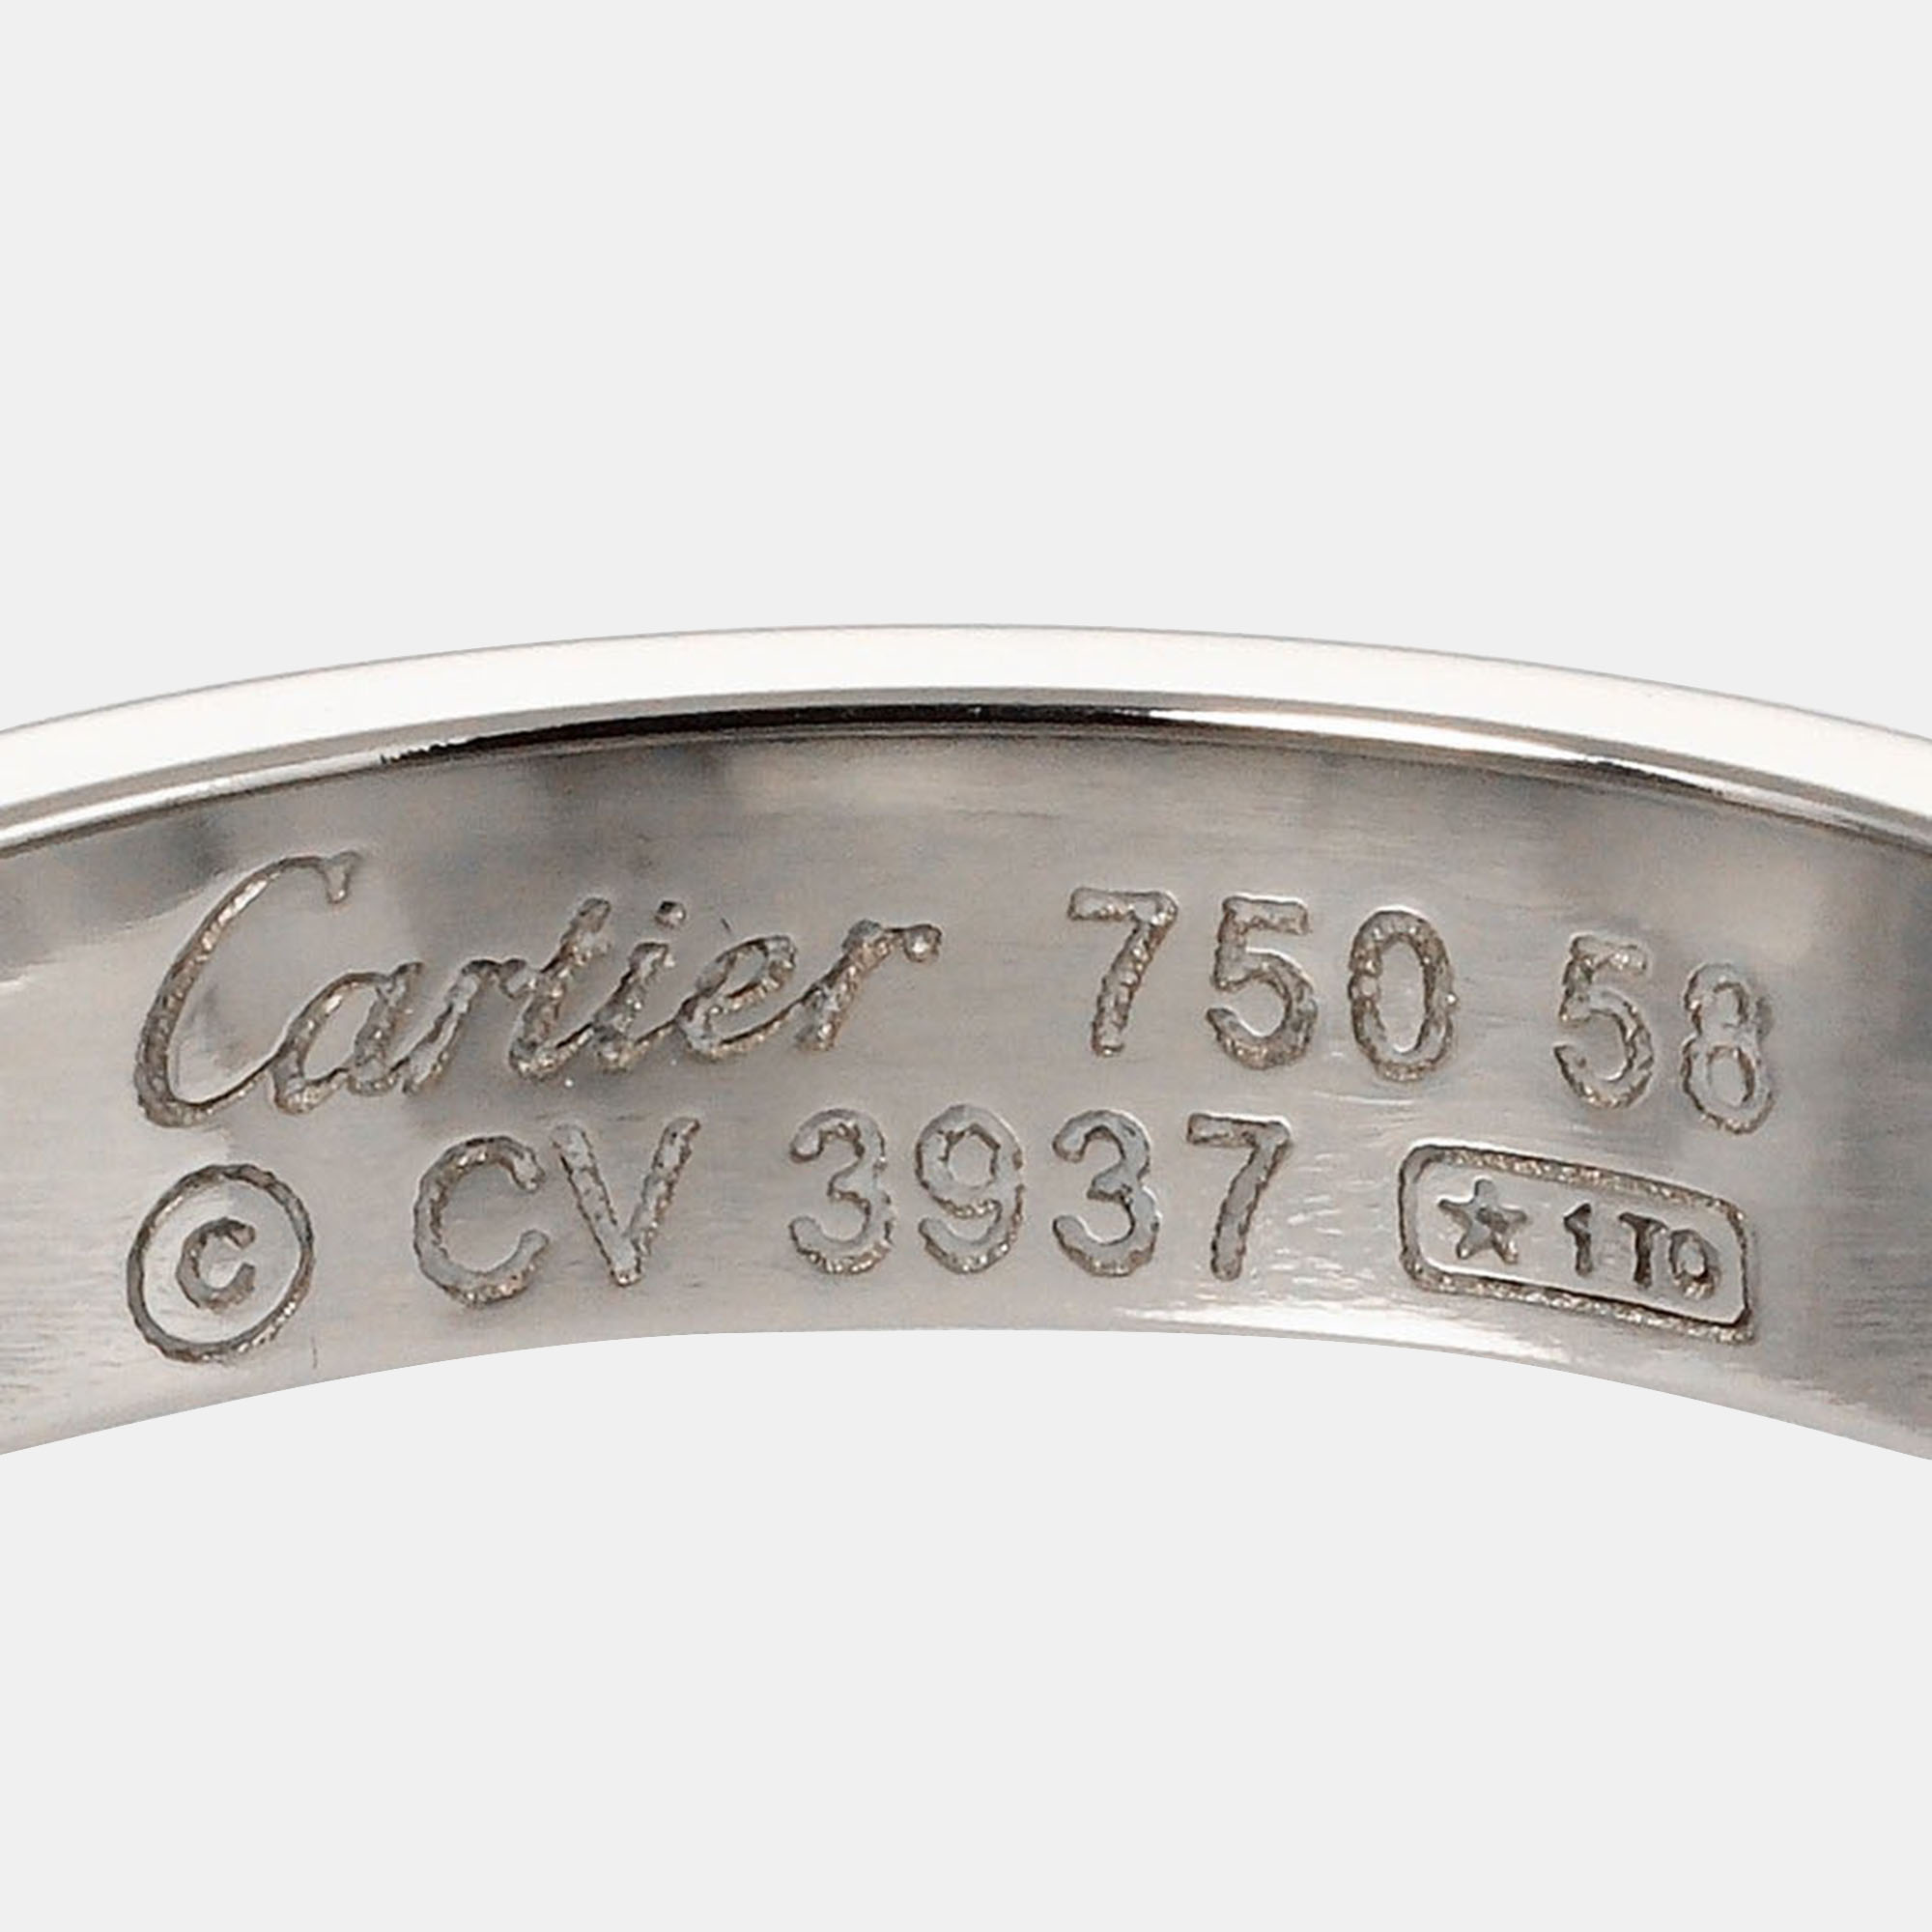 Cartier Love 18K White Gold Ring EU 58